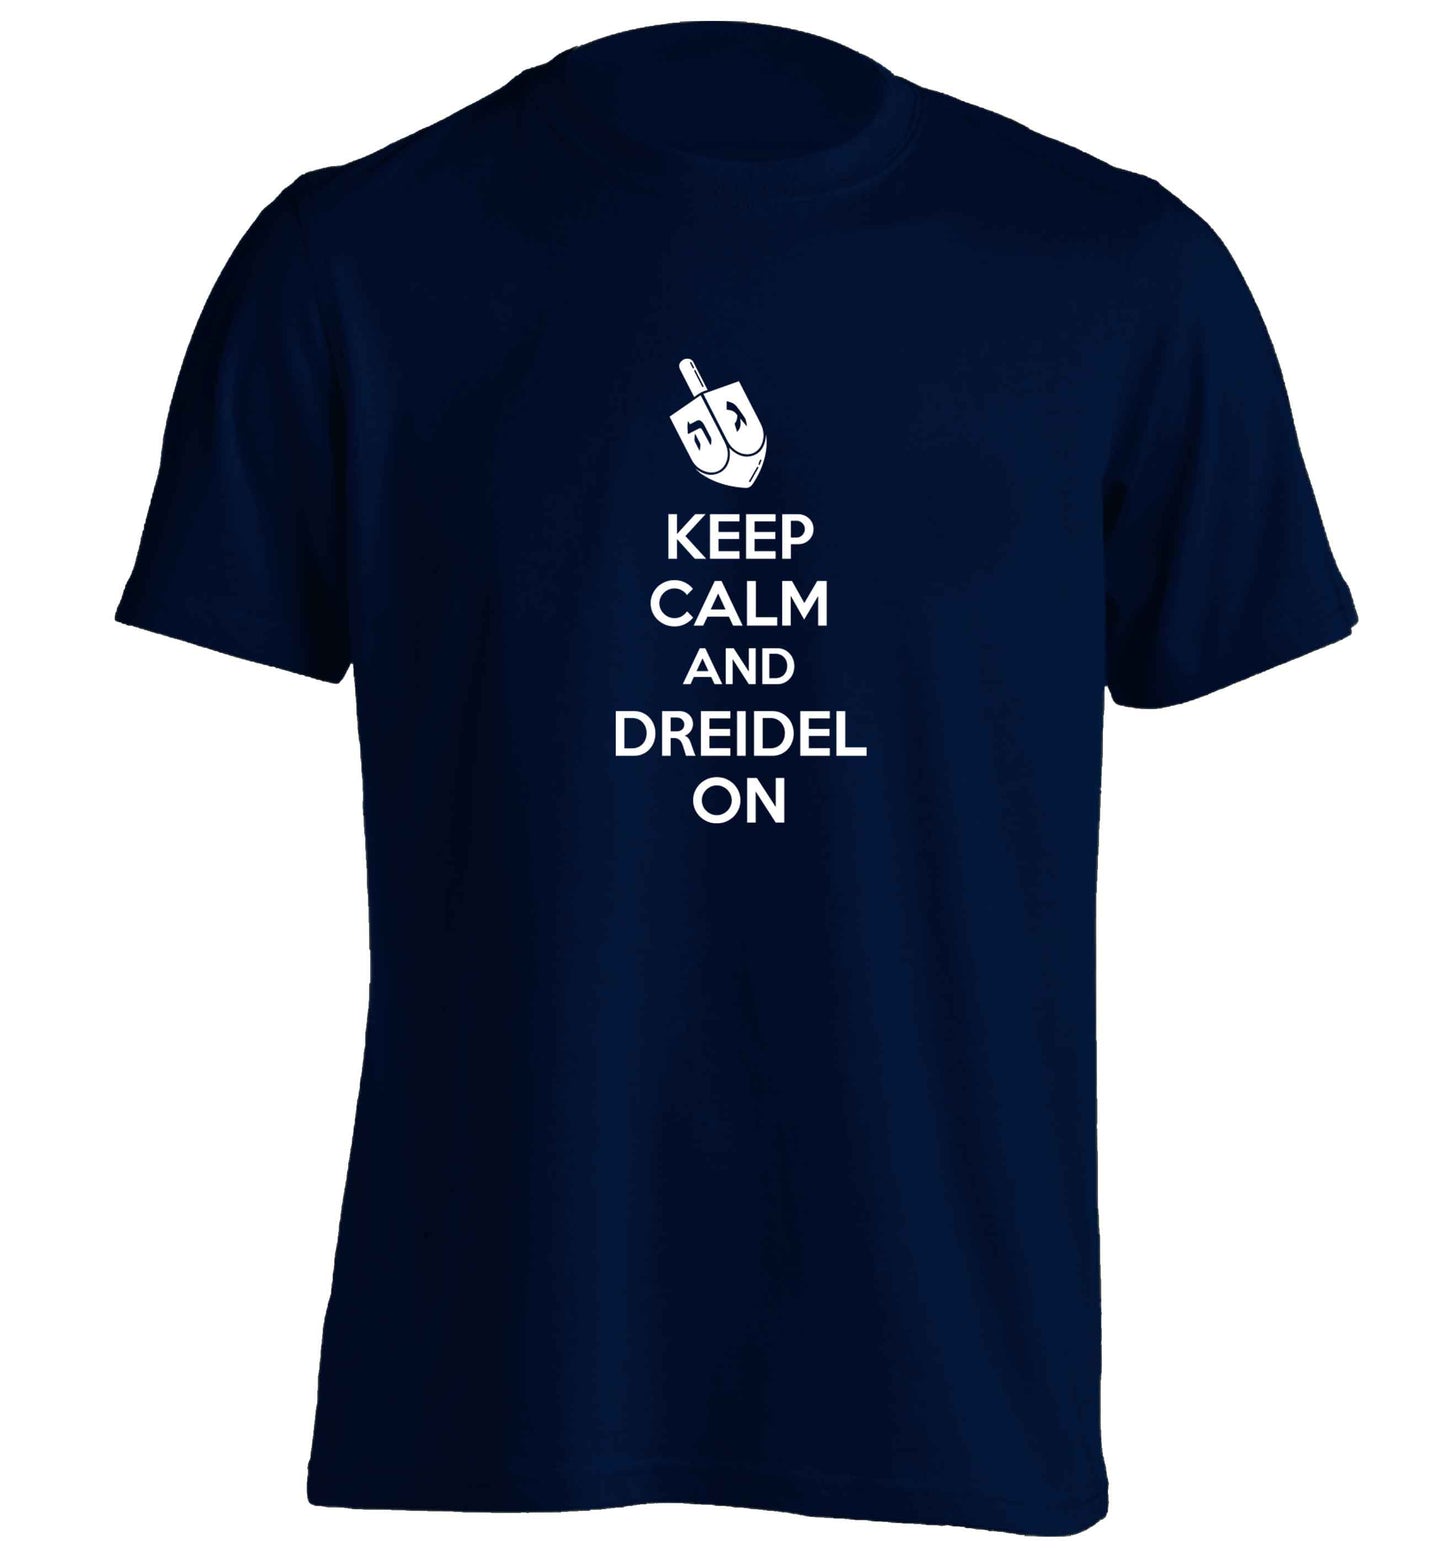 Keep calm and dreidel on adults unisex navy Tshirt 2XL